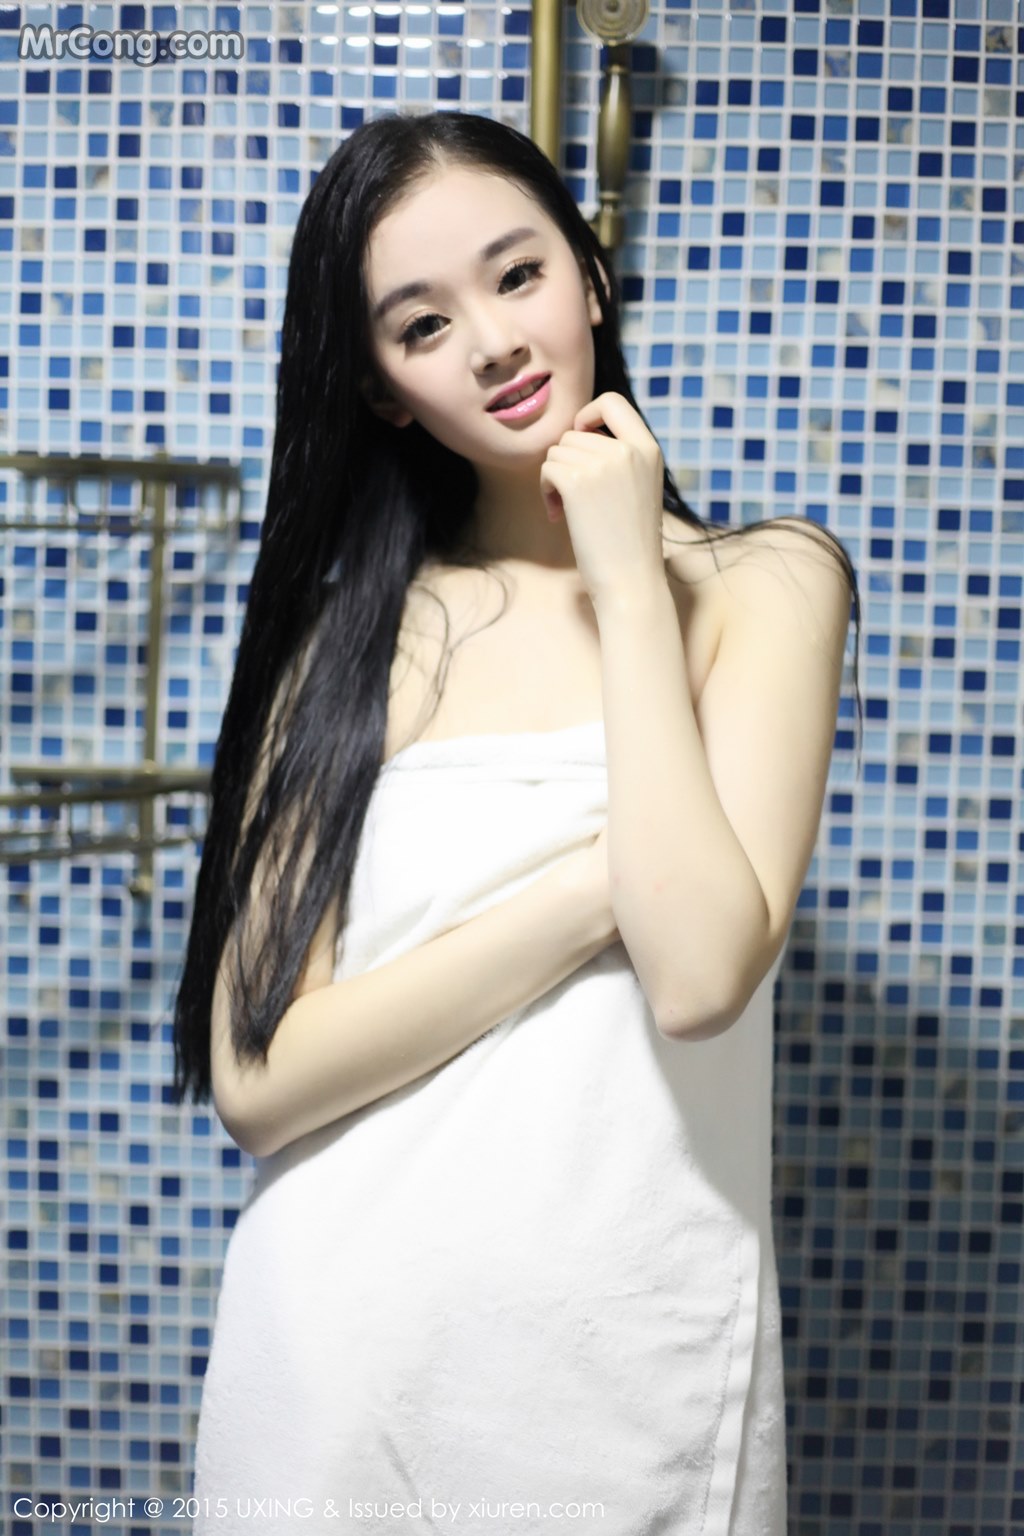 UXING Vol.029: Model Wen Xin Baby (温馨 baby) (50 photos) photo 1-2